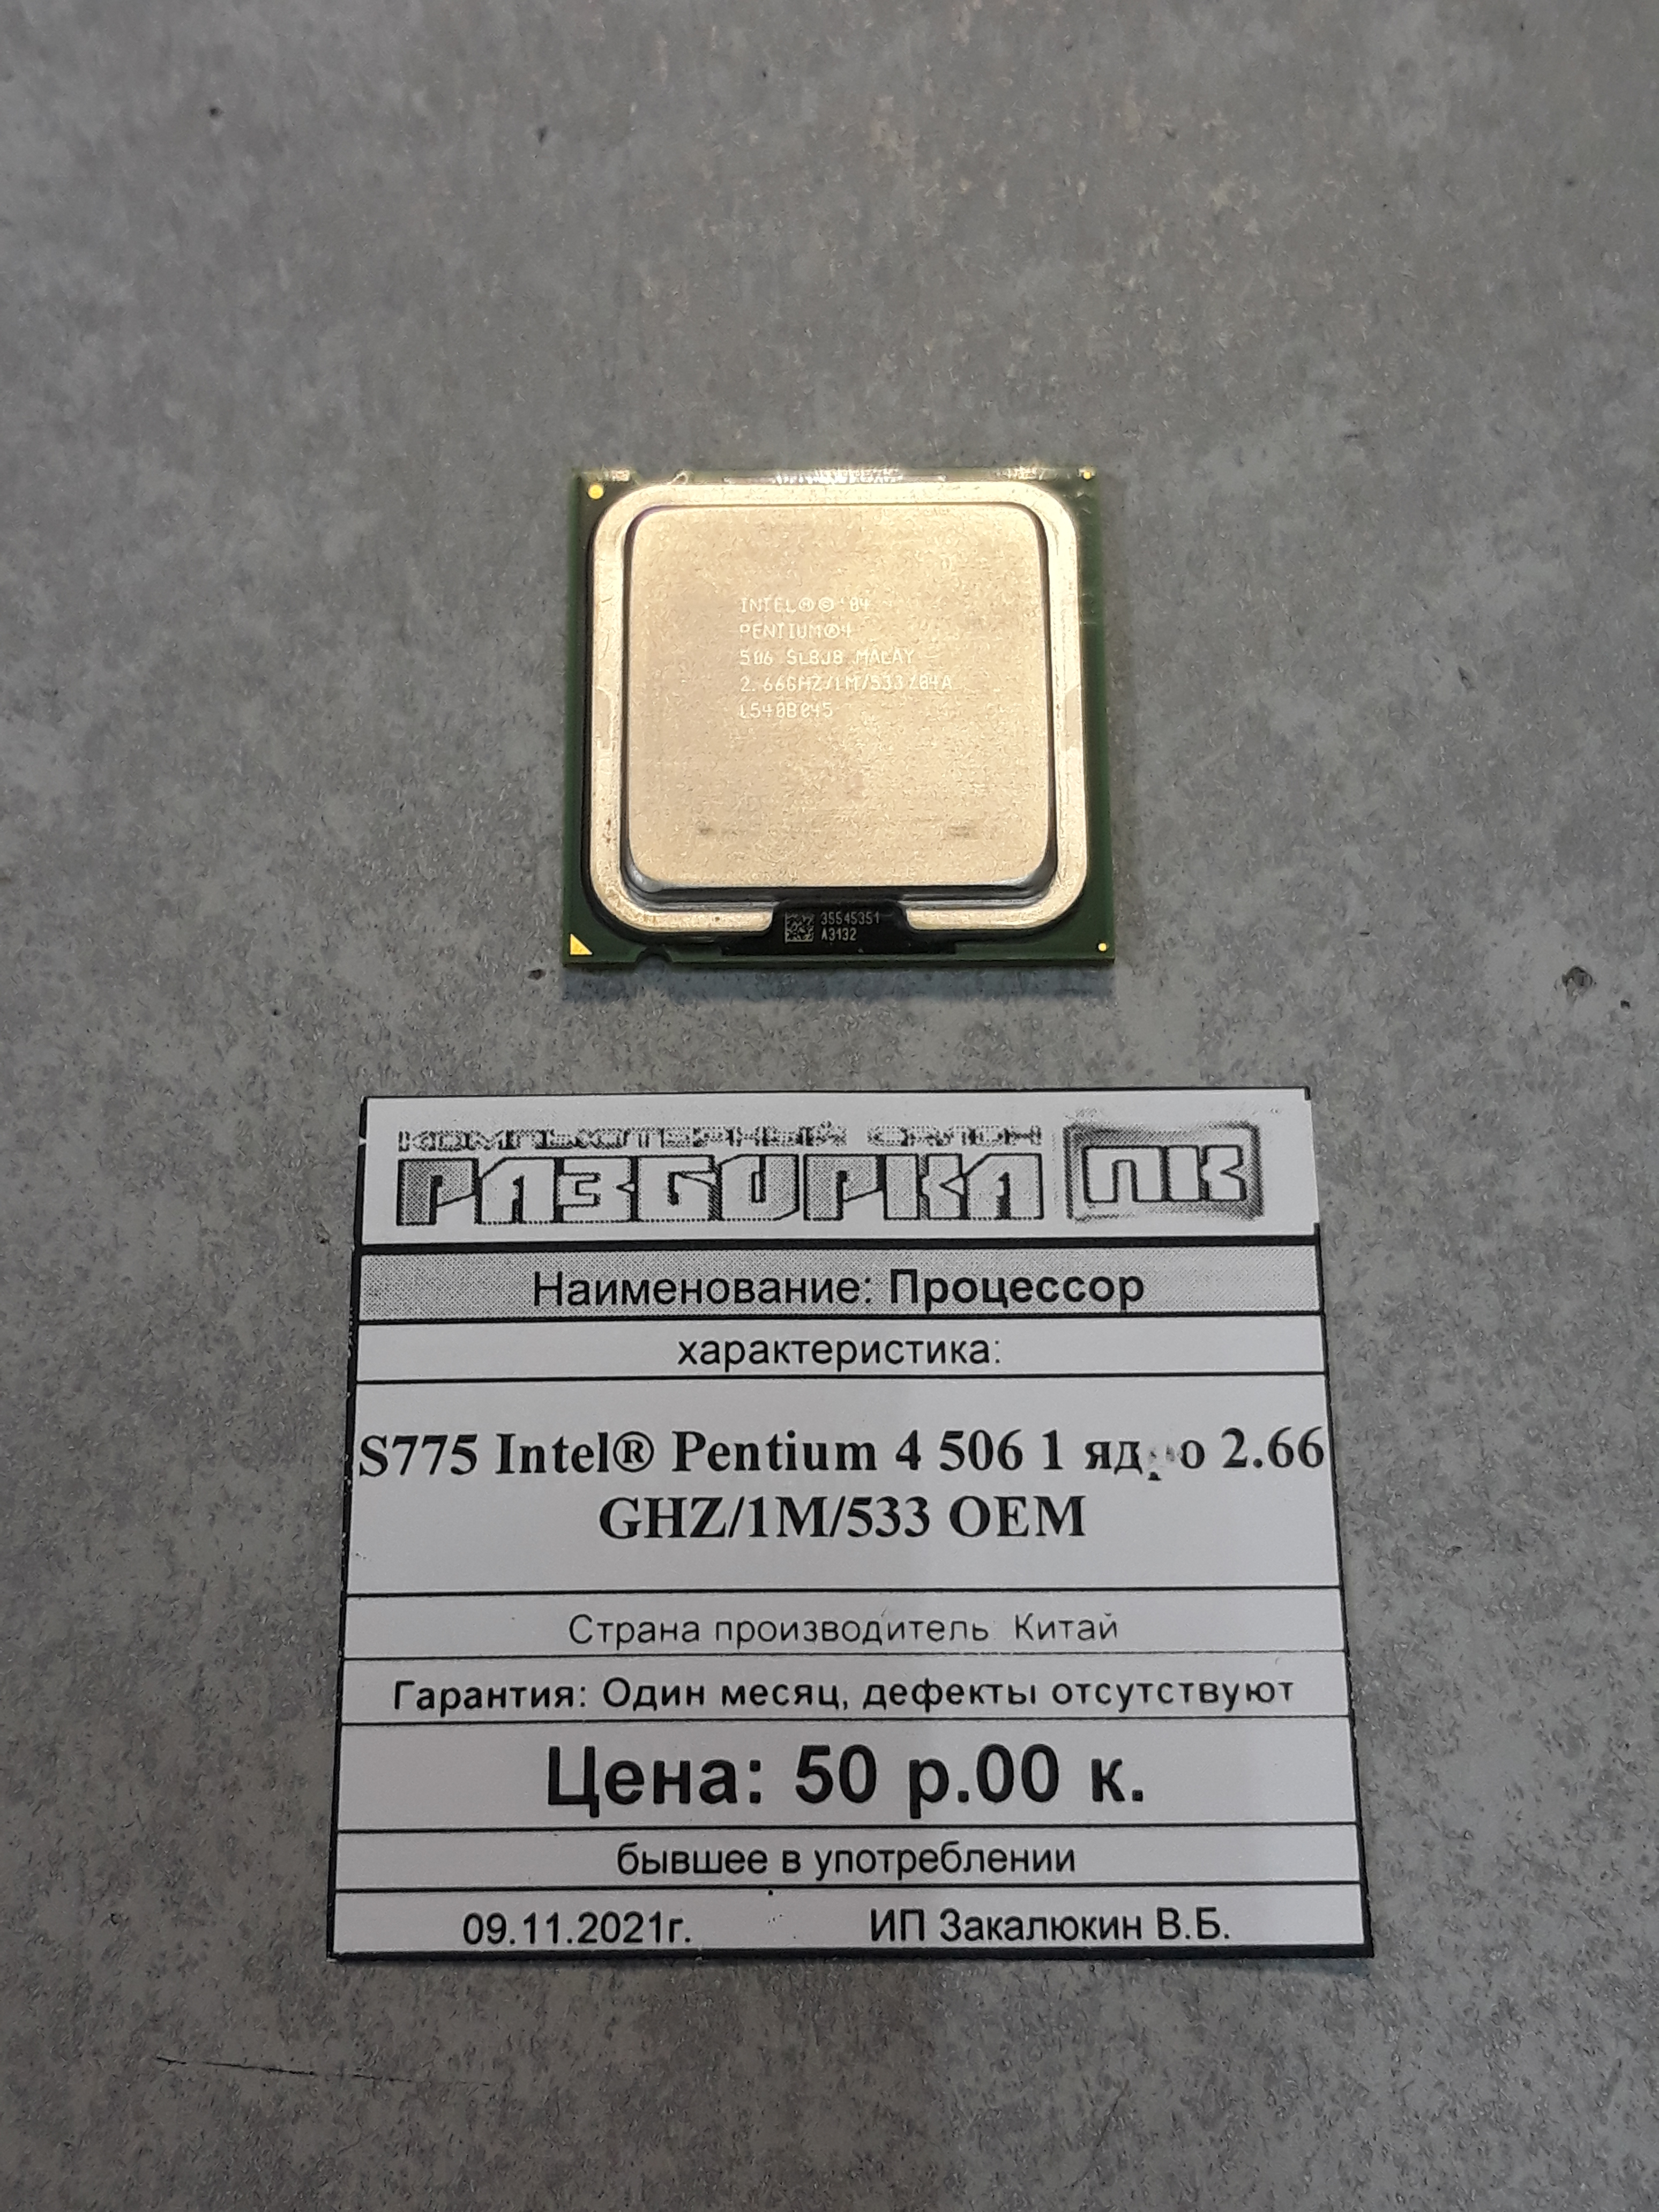 S775 Intel® Pentium 4 506 1 ядро 2.66 GHZ/1M/533 OEM